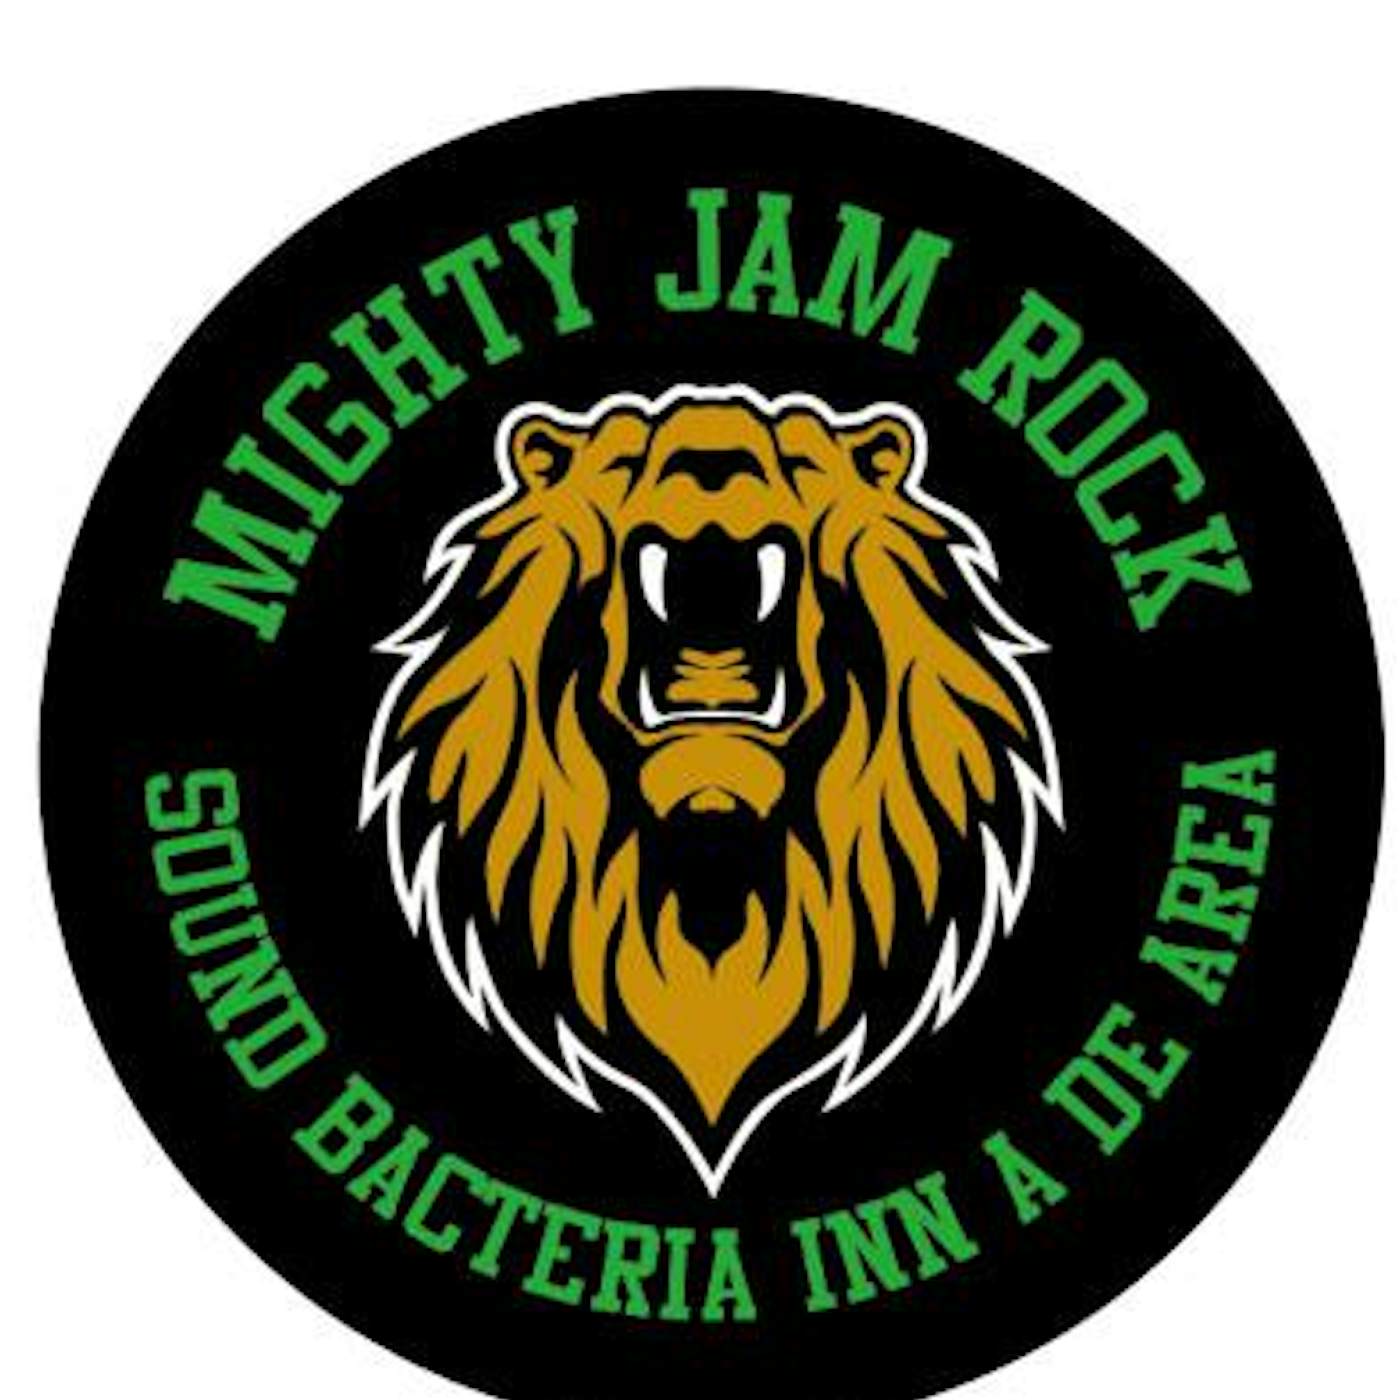 Mighty Jam Rock